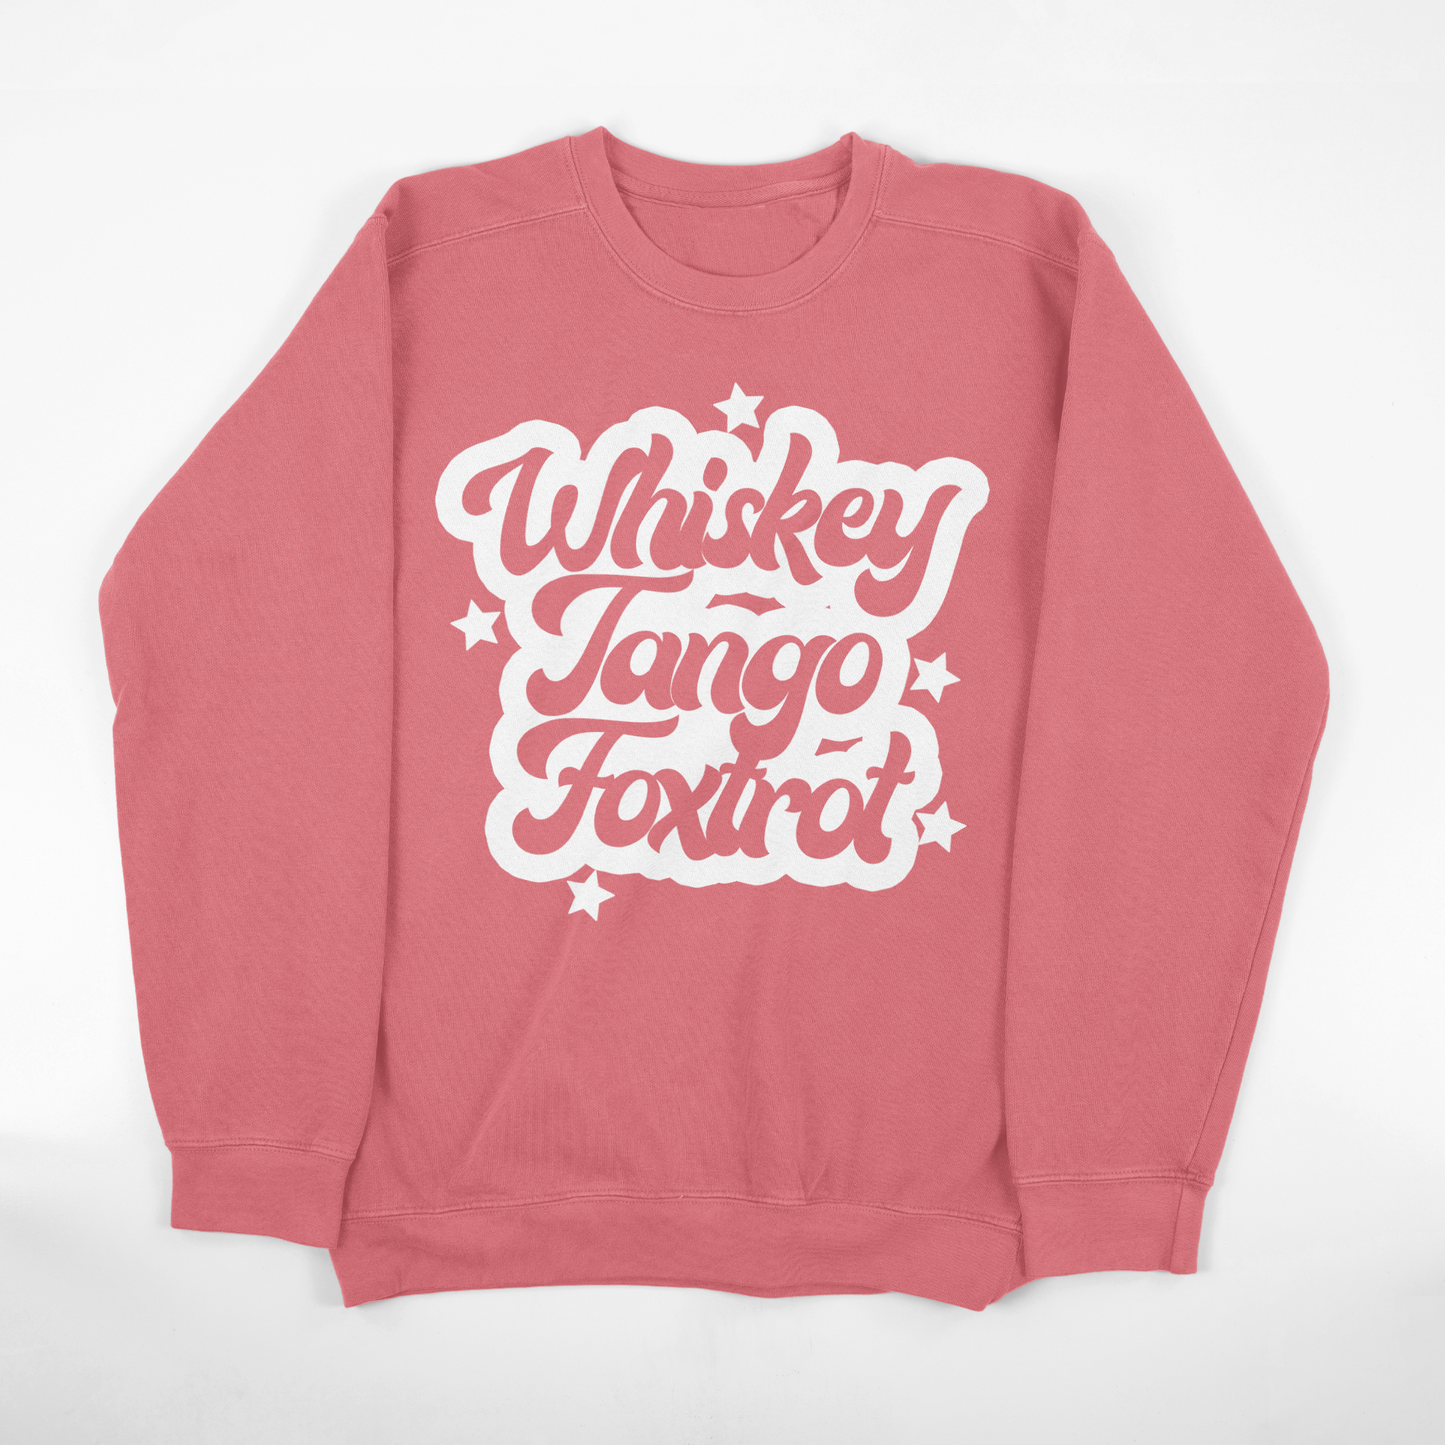 Whiskey Tango Foxtrot Crewneck